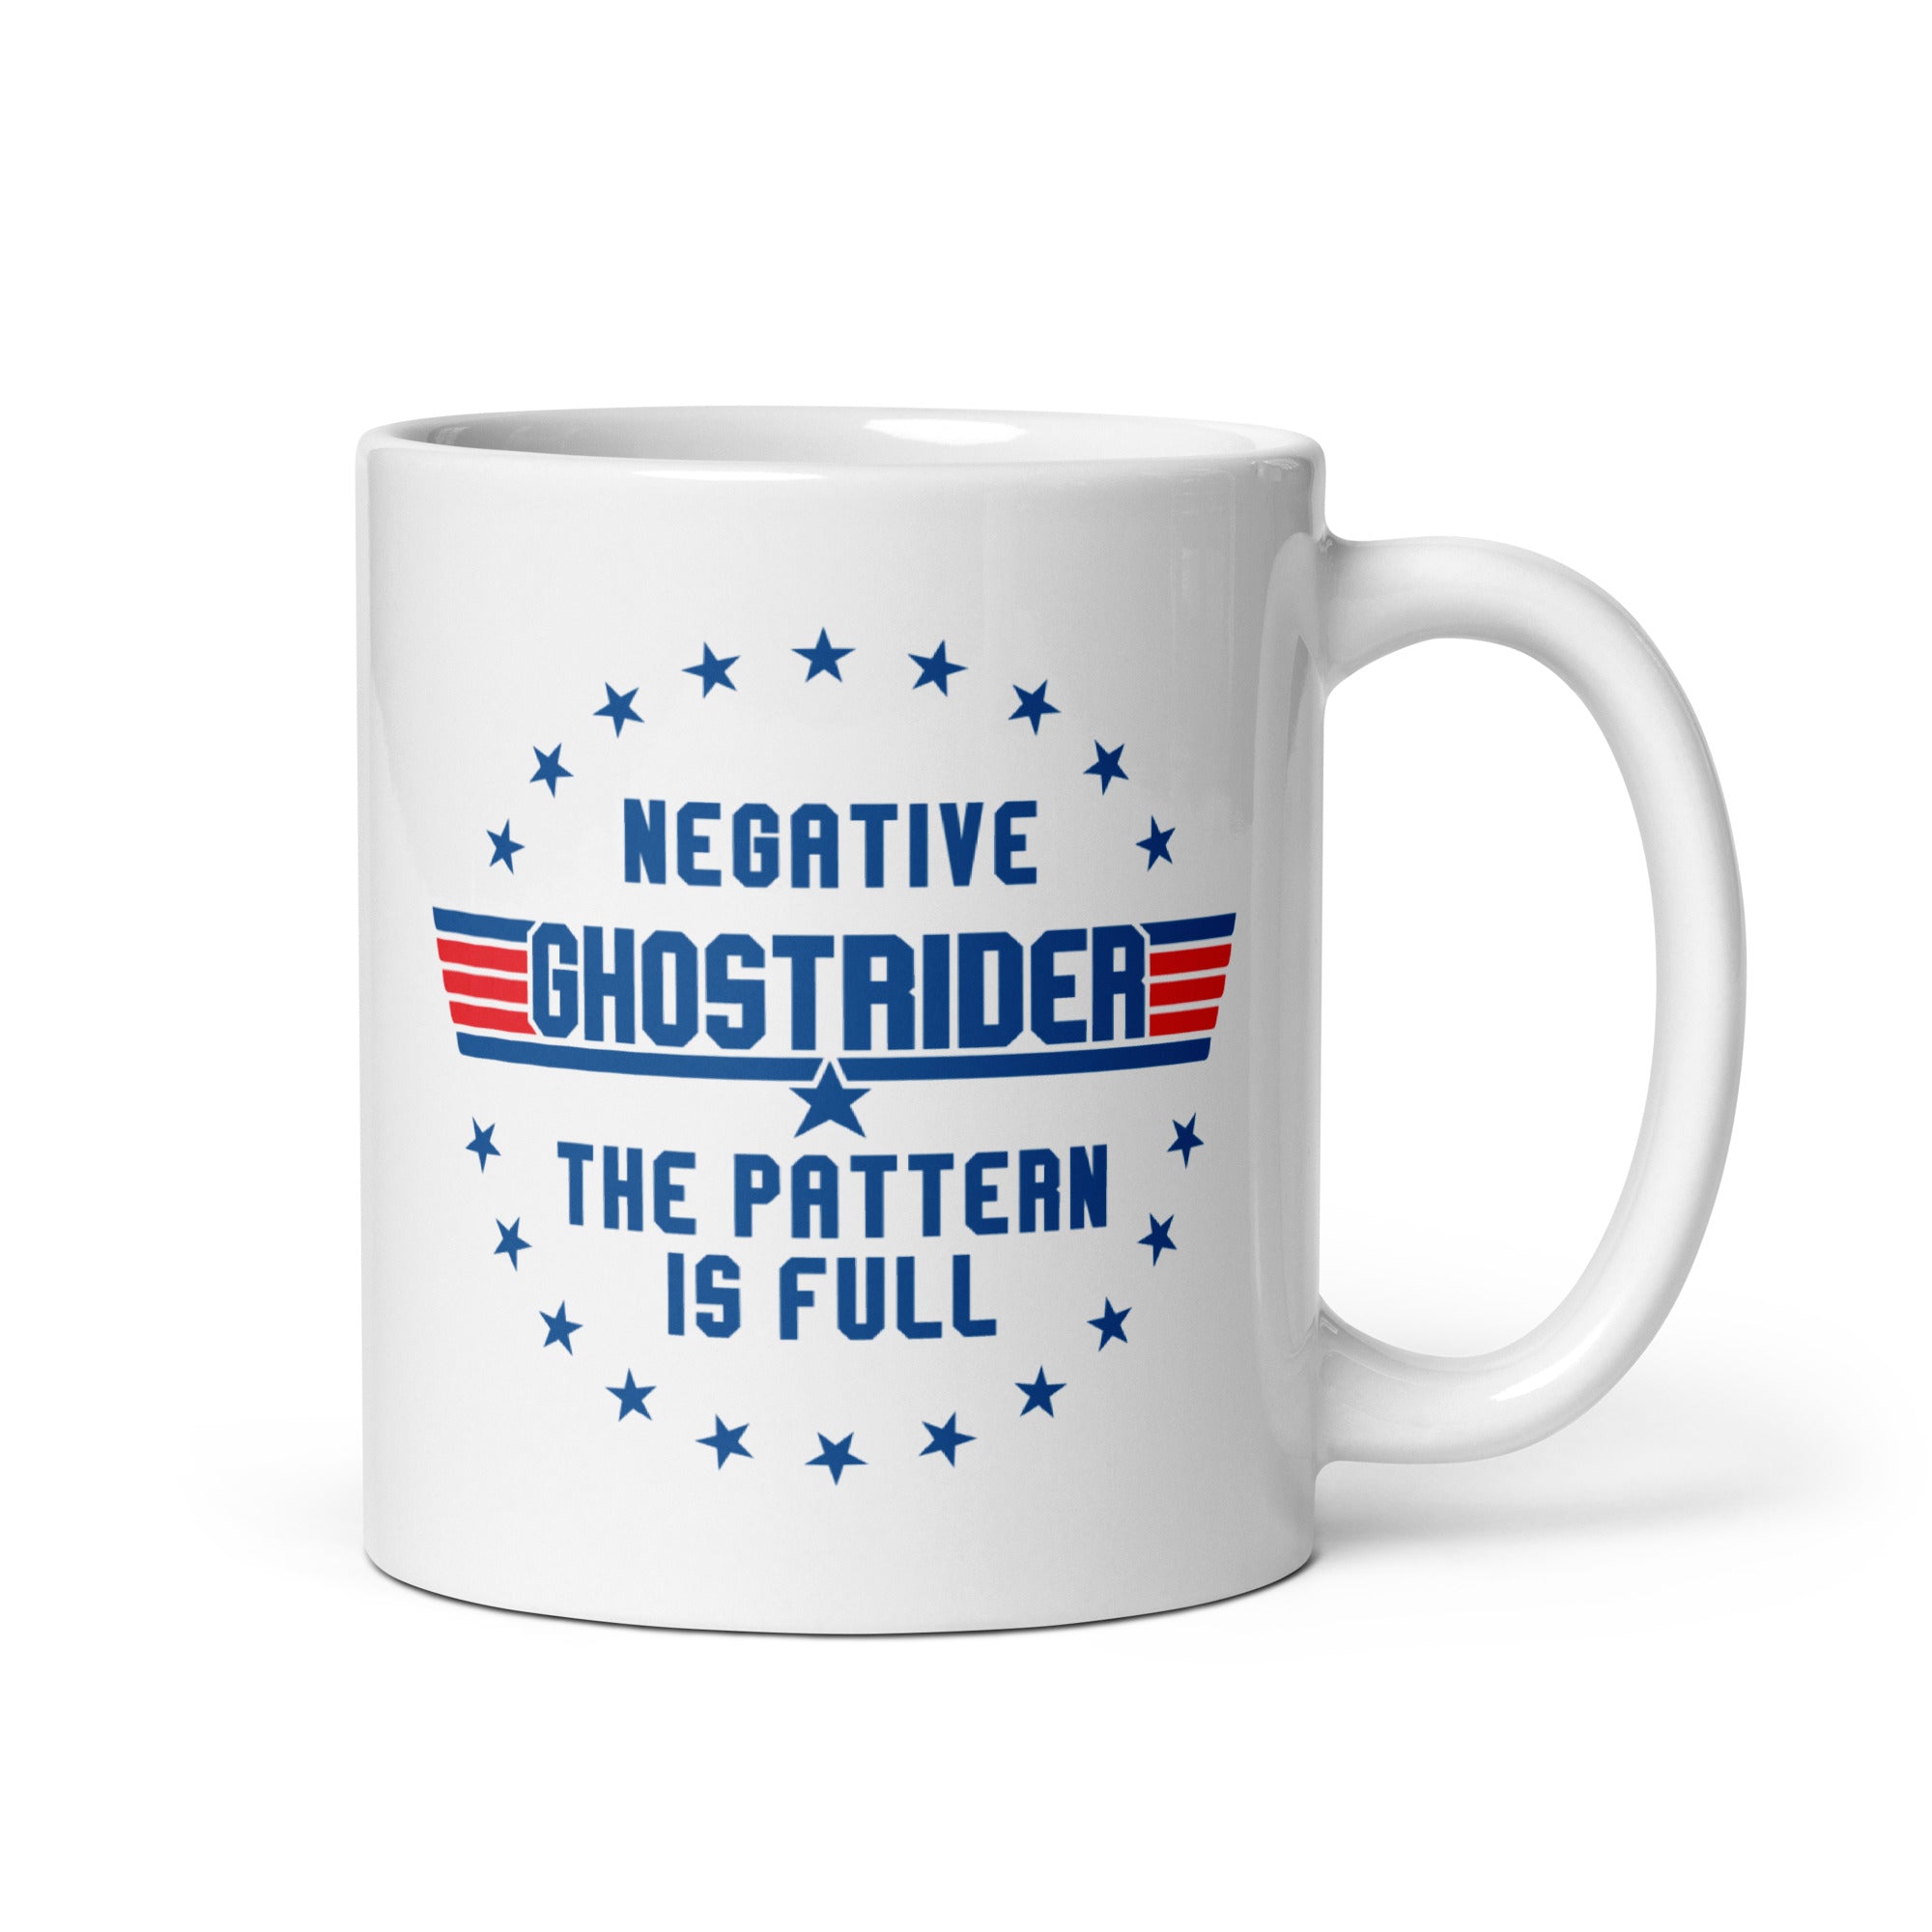 Negative Ghostrider The Pattern is Full - 11oz Coffee Mug